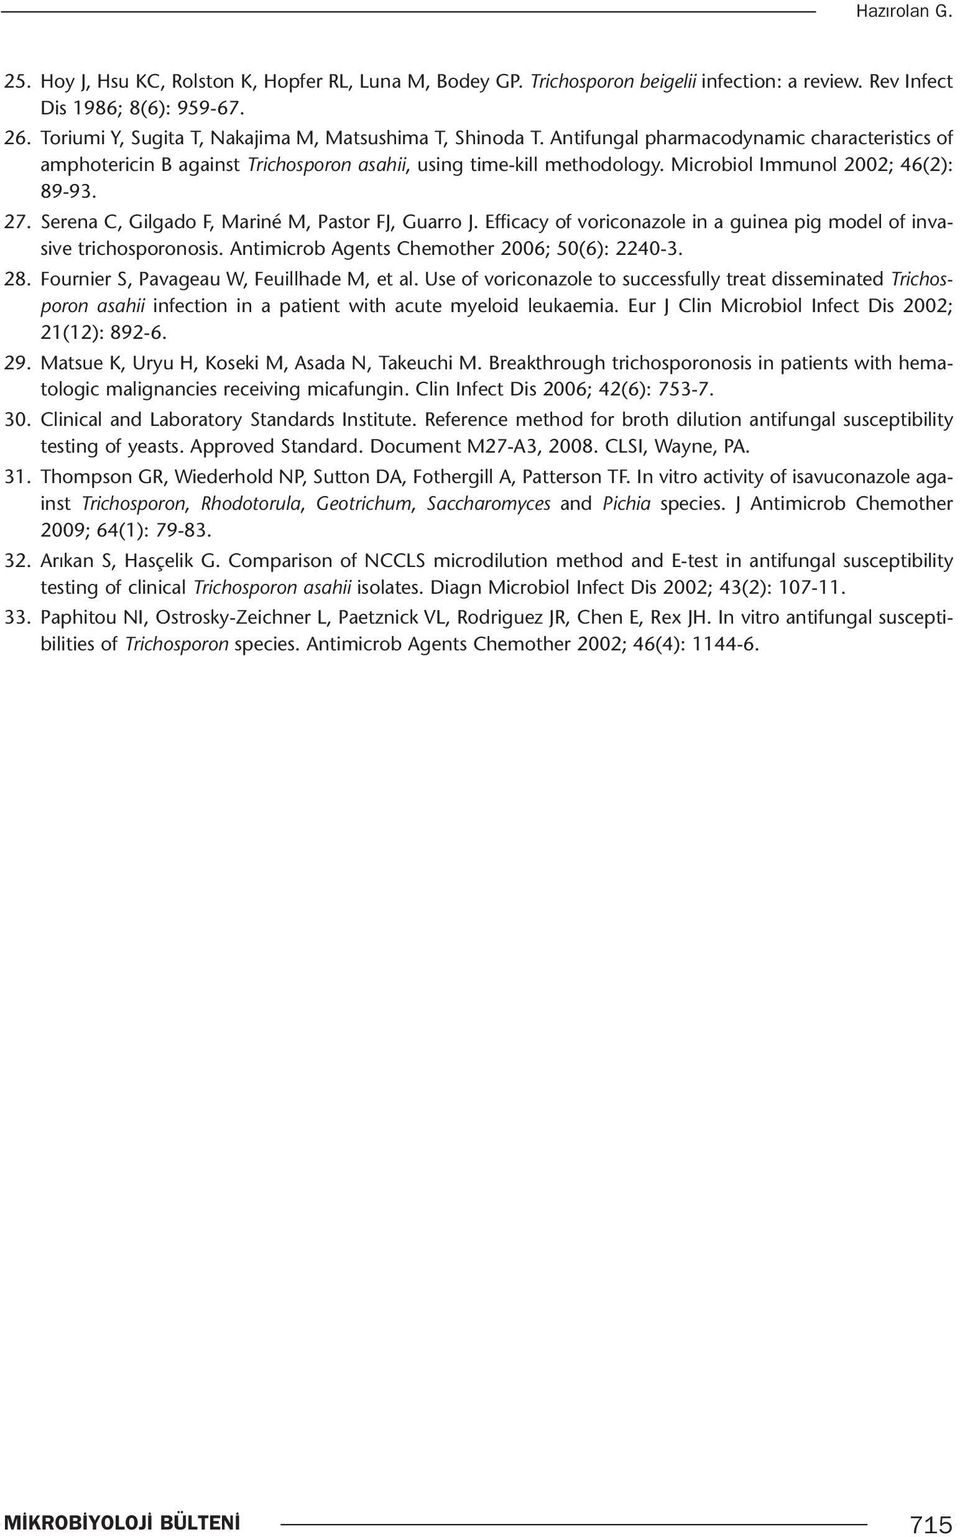 Microbiol Immunol 2002; 46(2): 89-93. 27. Serena C, Gilgado F, Mariné M, Pastor FJ, Guarro J. Efficacy of voriconazole in a guinea pig model of invasive trichosporonosis.